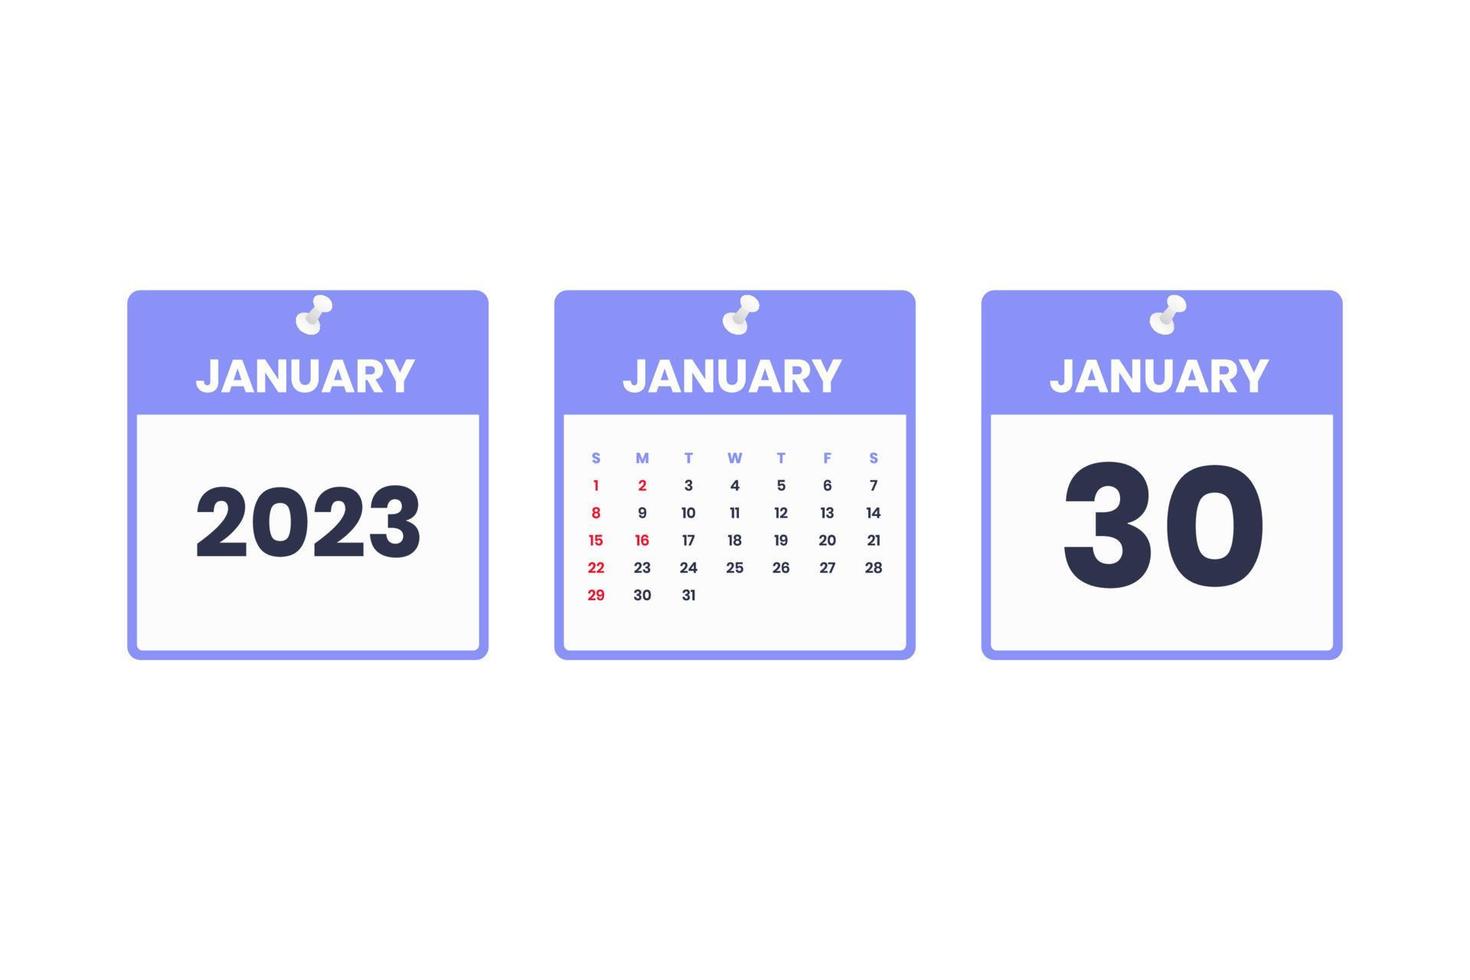 Januar Kalenderdesign. 30. januar 2023 kalendersymbol für zeitplan, termin, wichtiges datumskonzept vektor